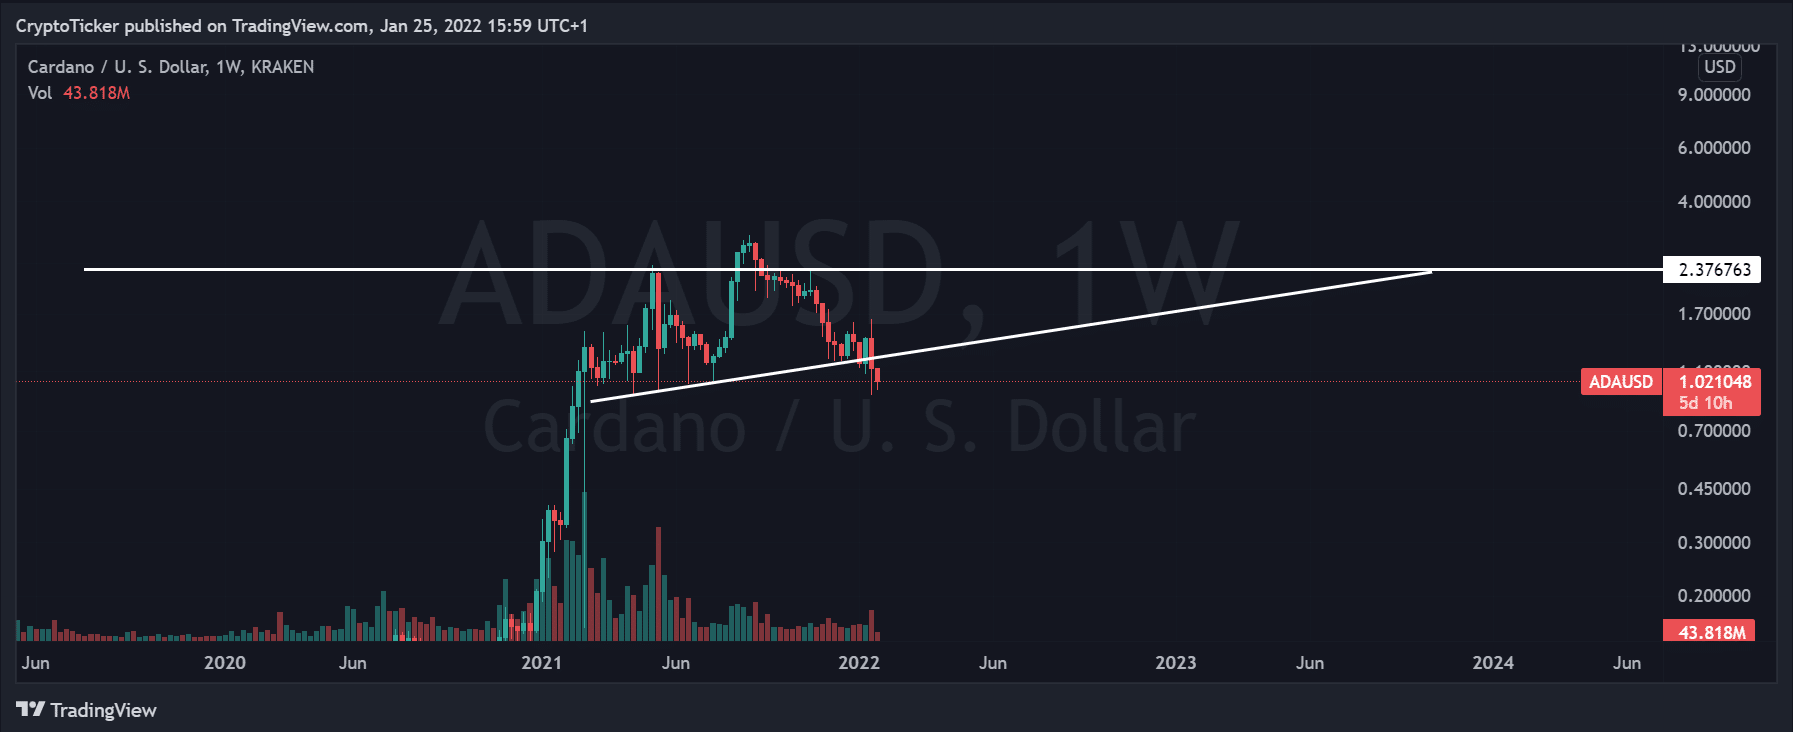 Cardano price prediction - ADA/USD 1-week chart showing ADA's breakout 